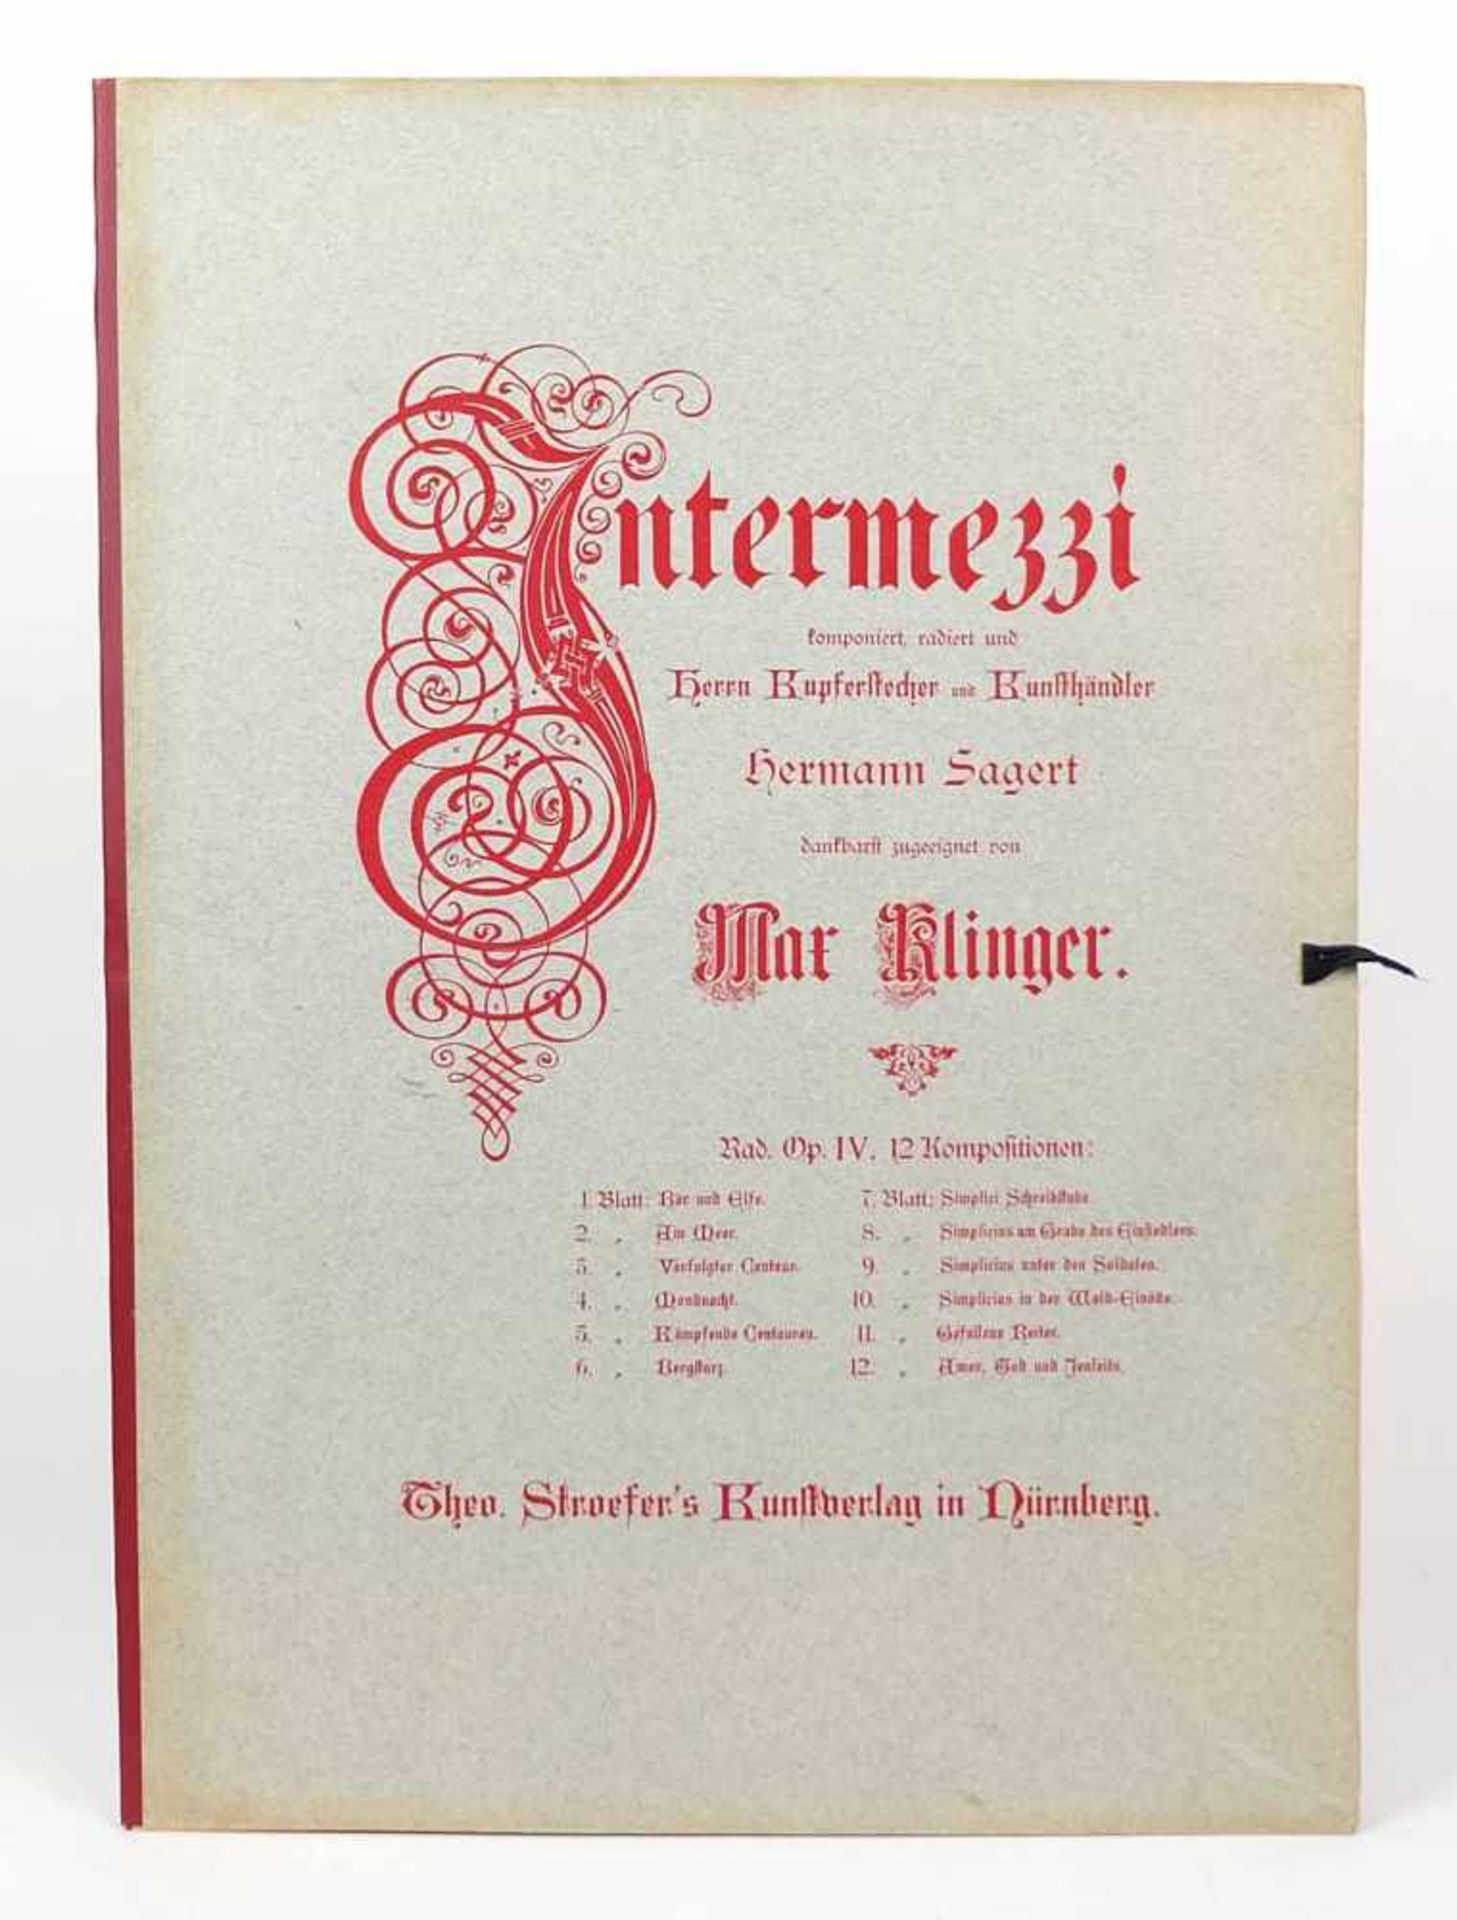 KLINGER, Max (*18.02.1857 Leipzig +04.07.1920 Großjena), Mappe "Intermezzi Opus IV", 12